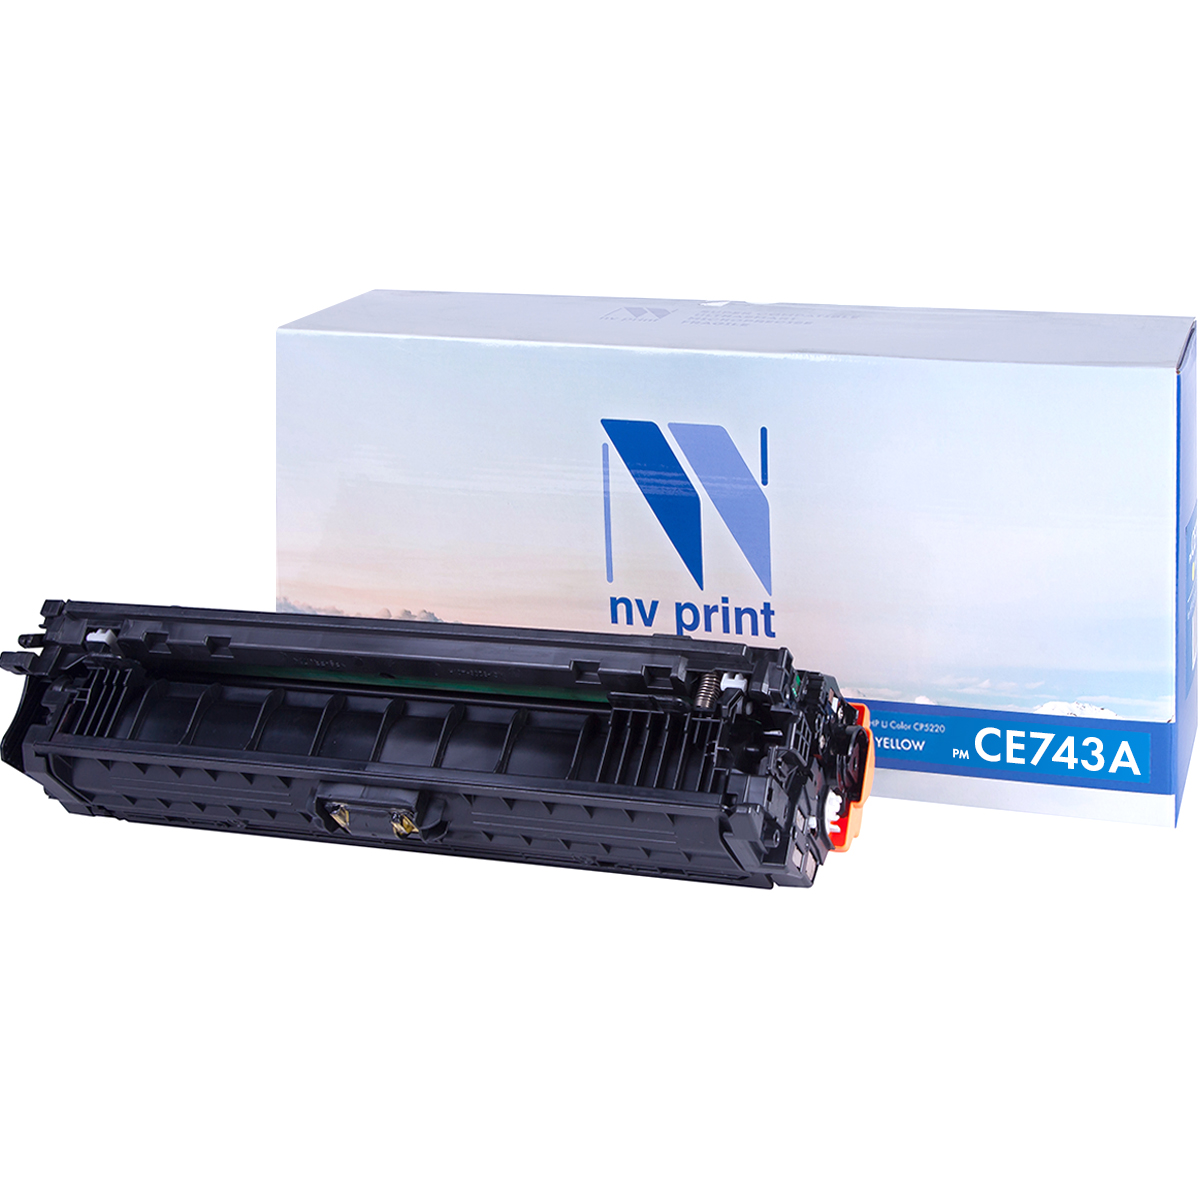   NV-Print  HP LaserJet Color CP5220/CP5225, CE743A Magenta